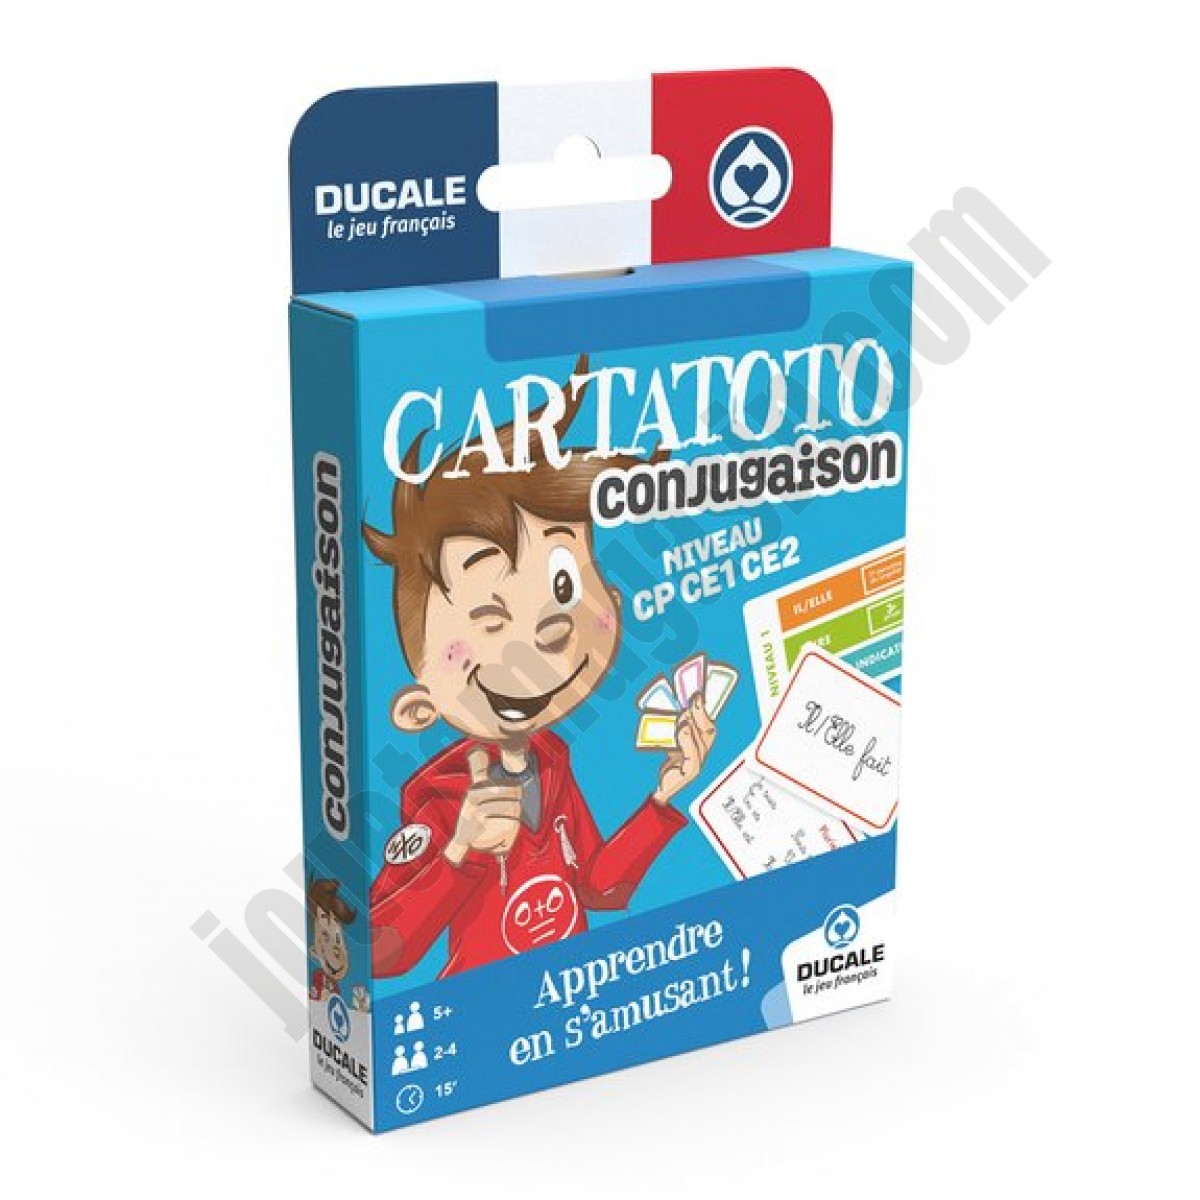 Cartatoto Conjugaison En promotion - Cartatoto Conjugaison En promotion